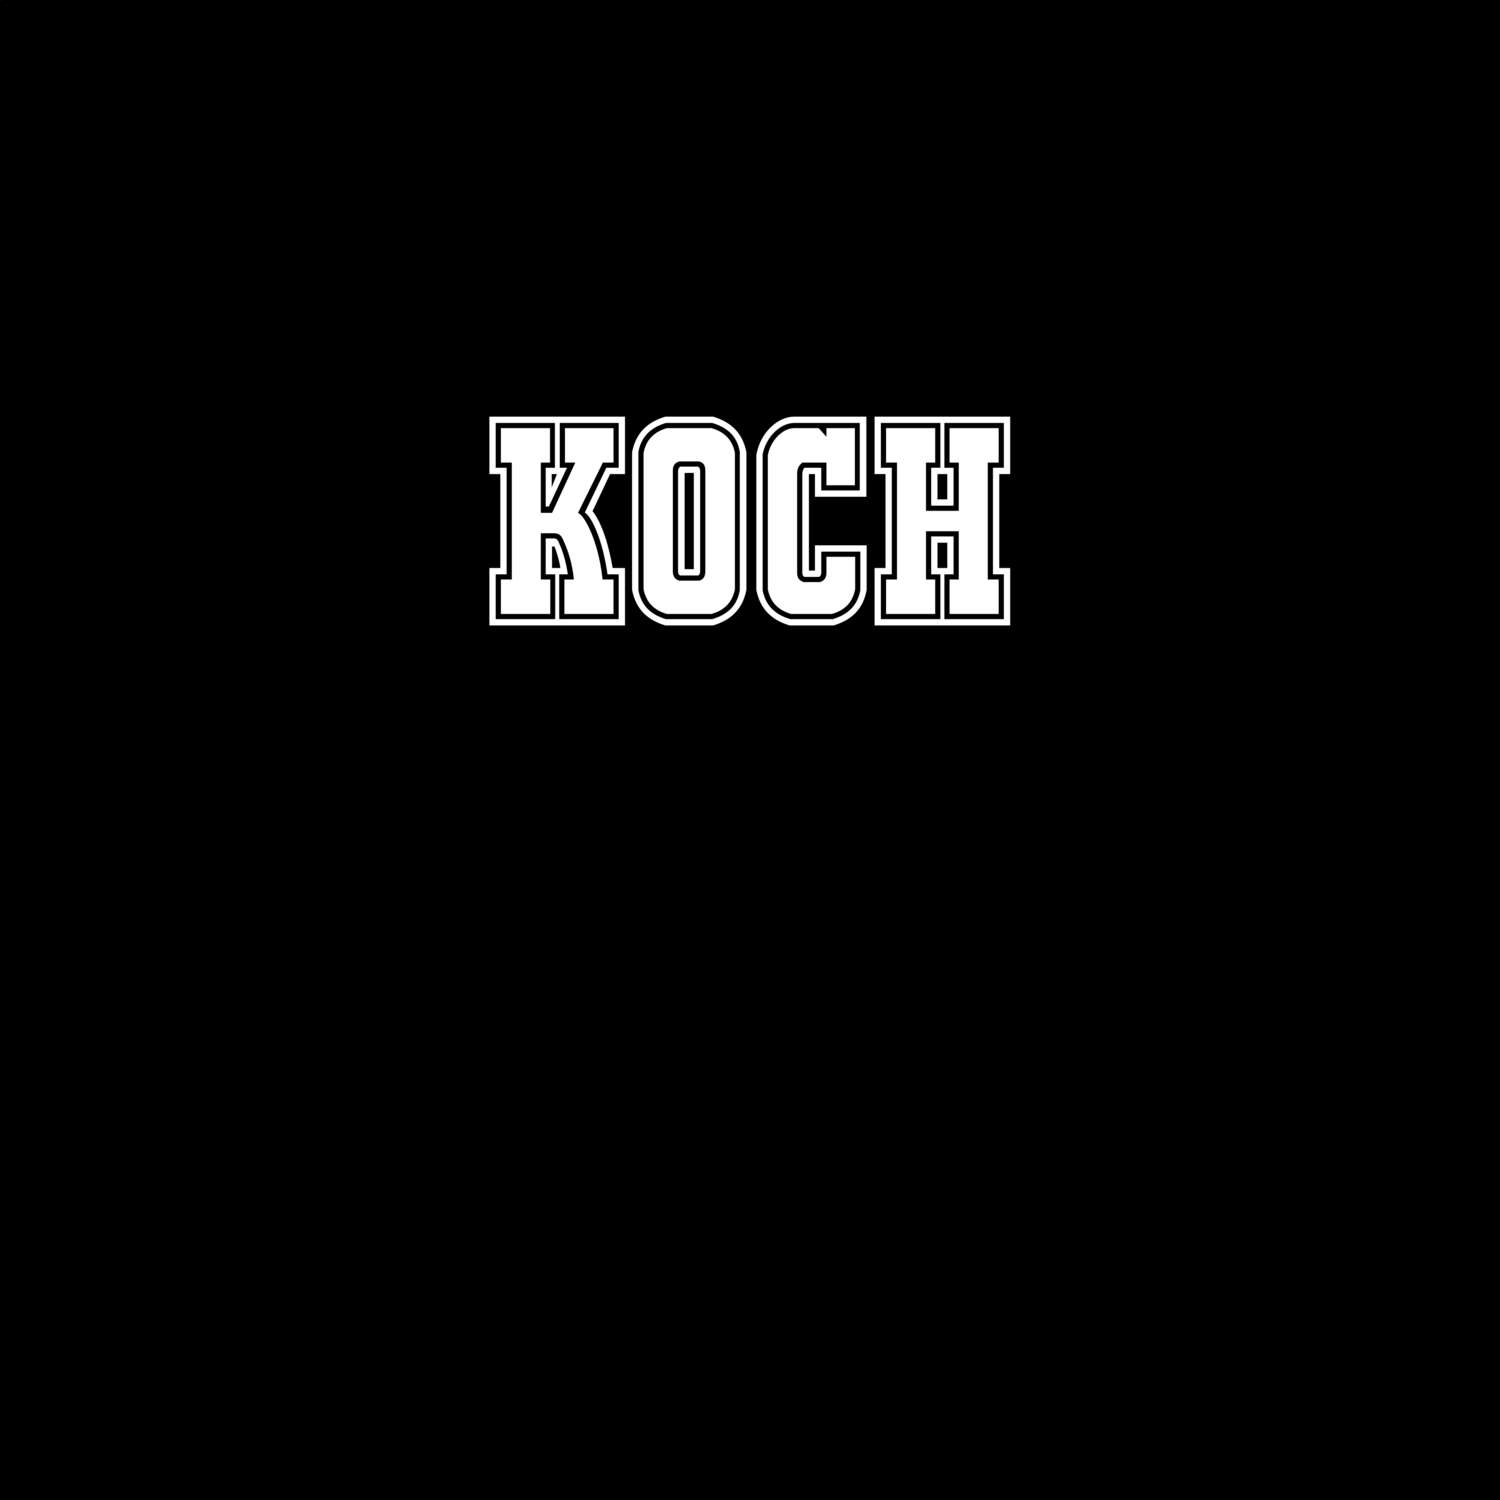 Koch T-Shirt »Classic«